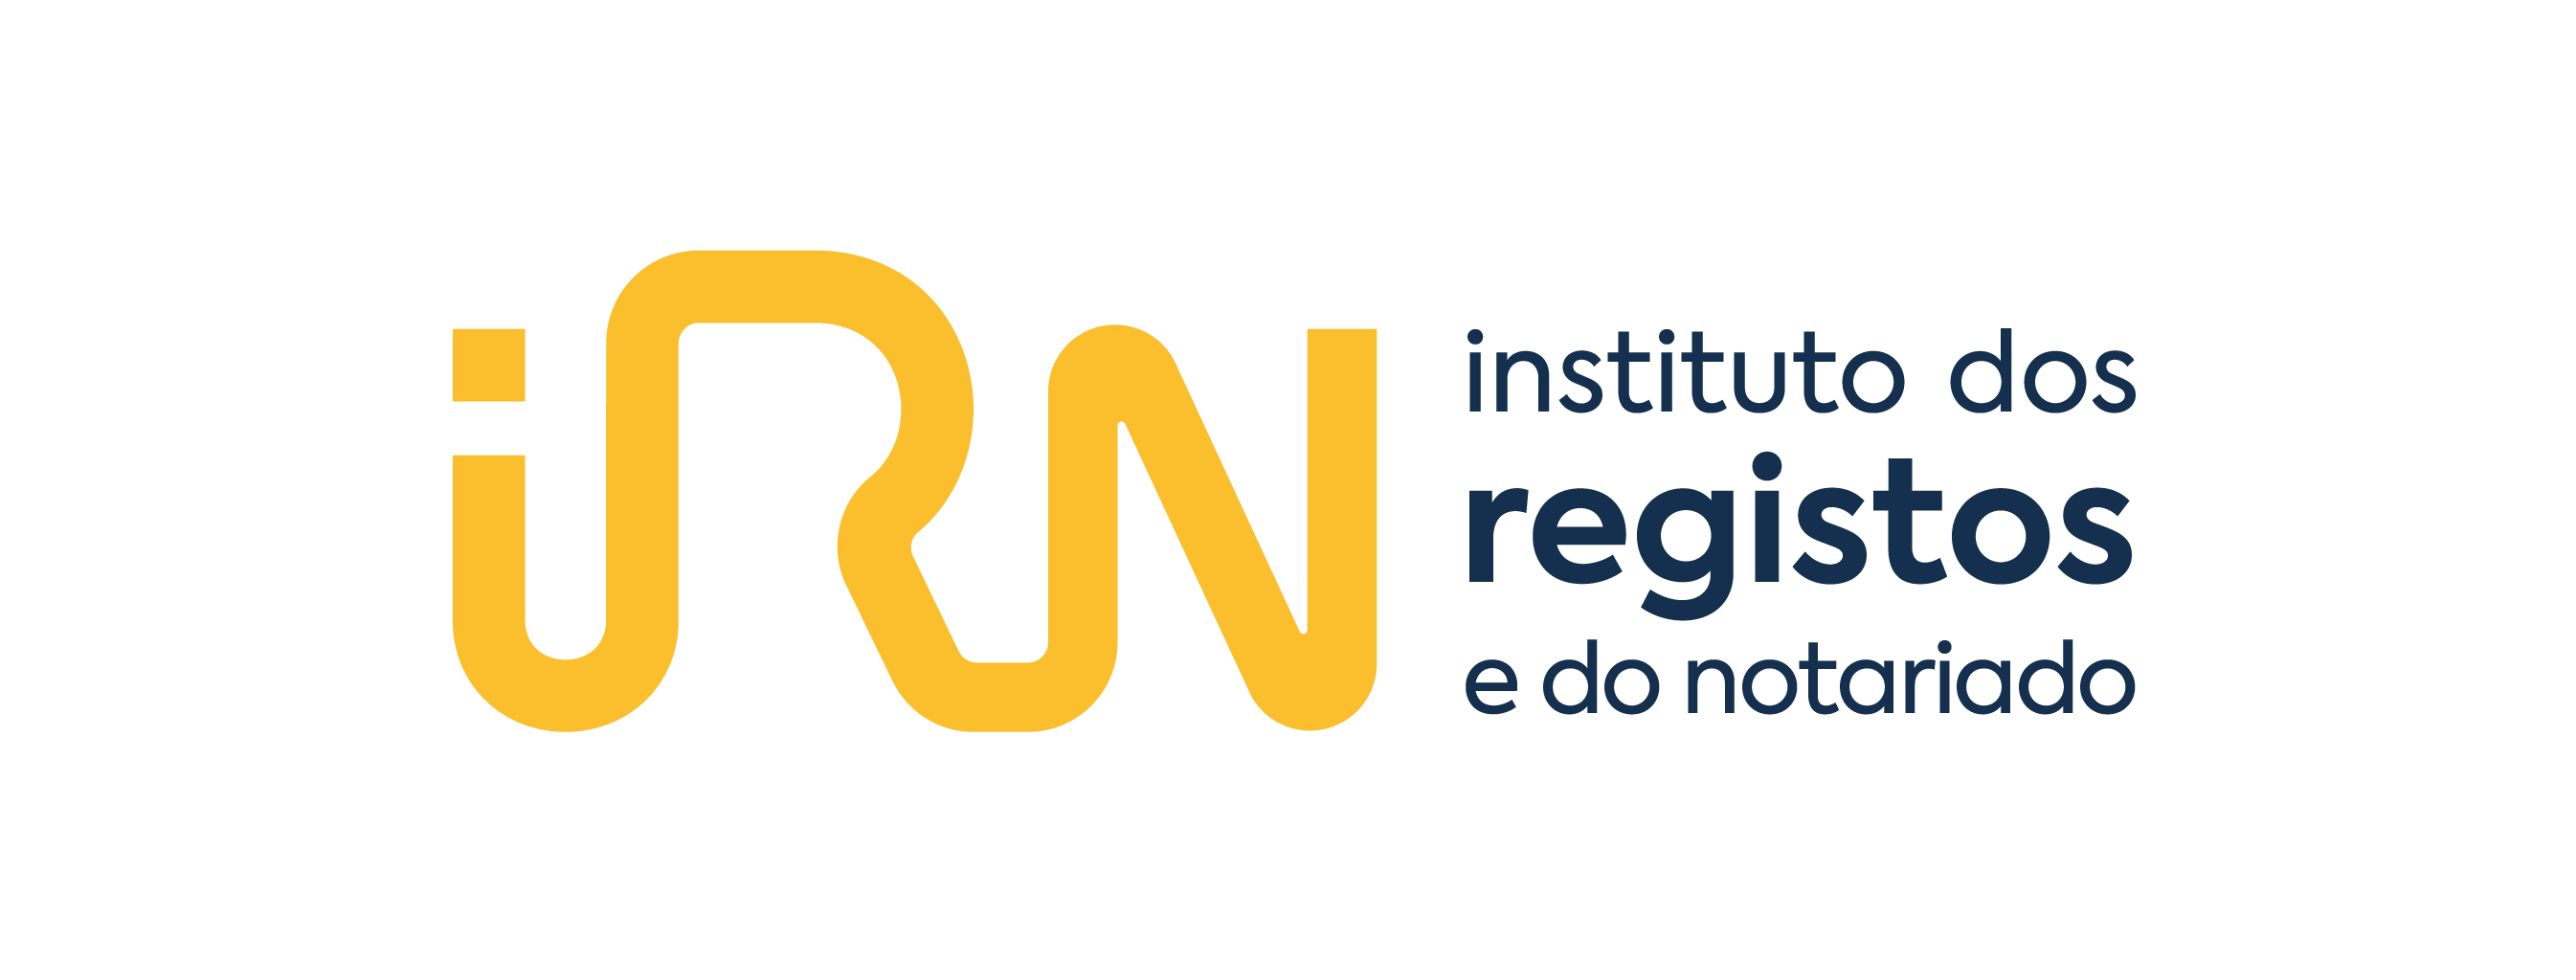 Logotipo Register a birth - ePortugal.gov.pt